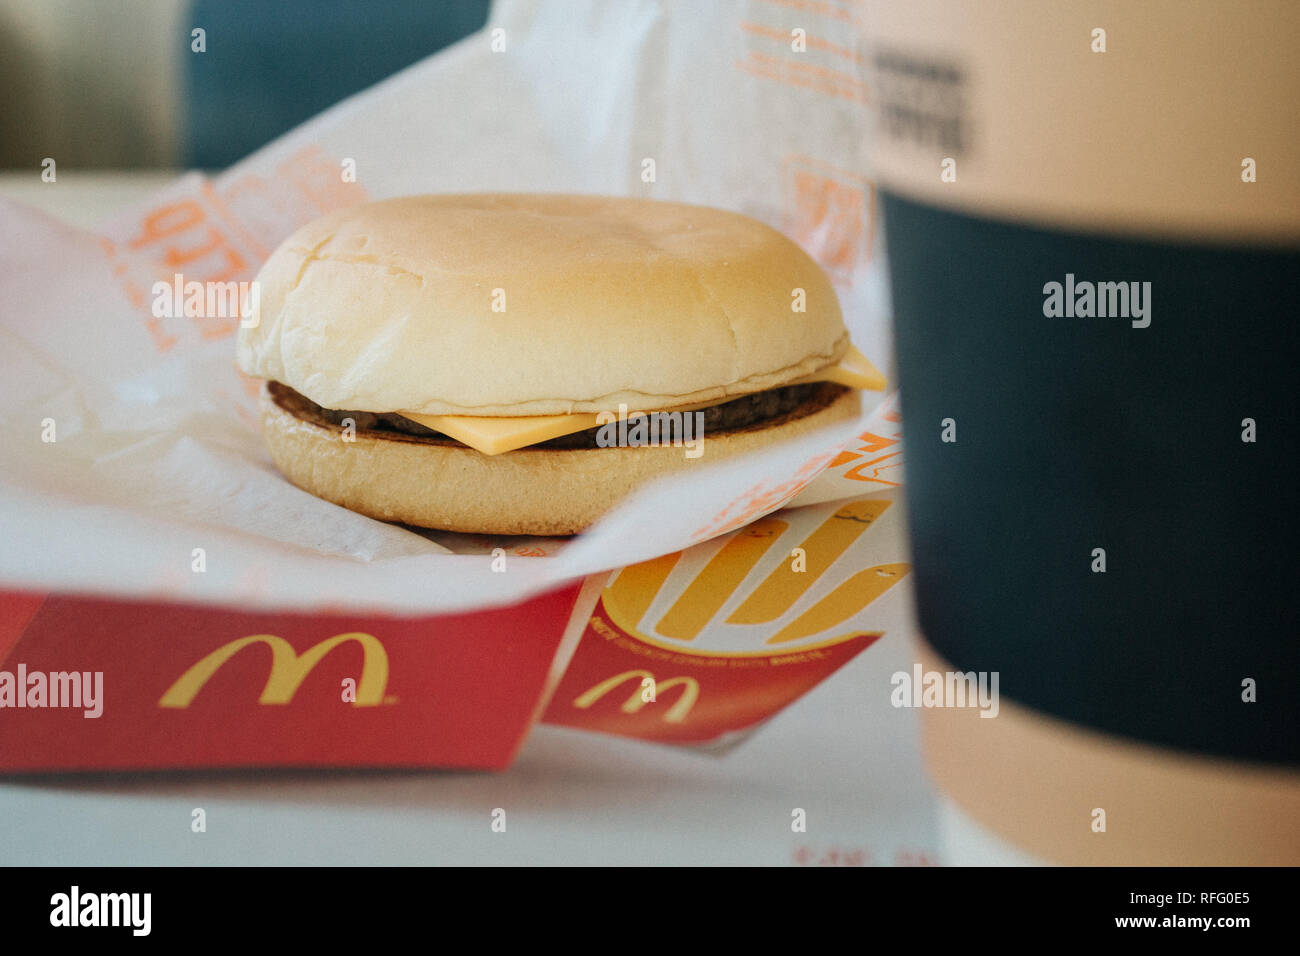 Moskau, Russland - 11 18 2018: Hamburger Menü bei McDonald's Restaurant, Kaffee, Cheeseburger. Fastfood und Junk Food Stockfoto